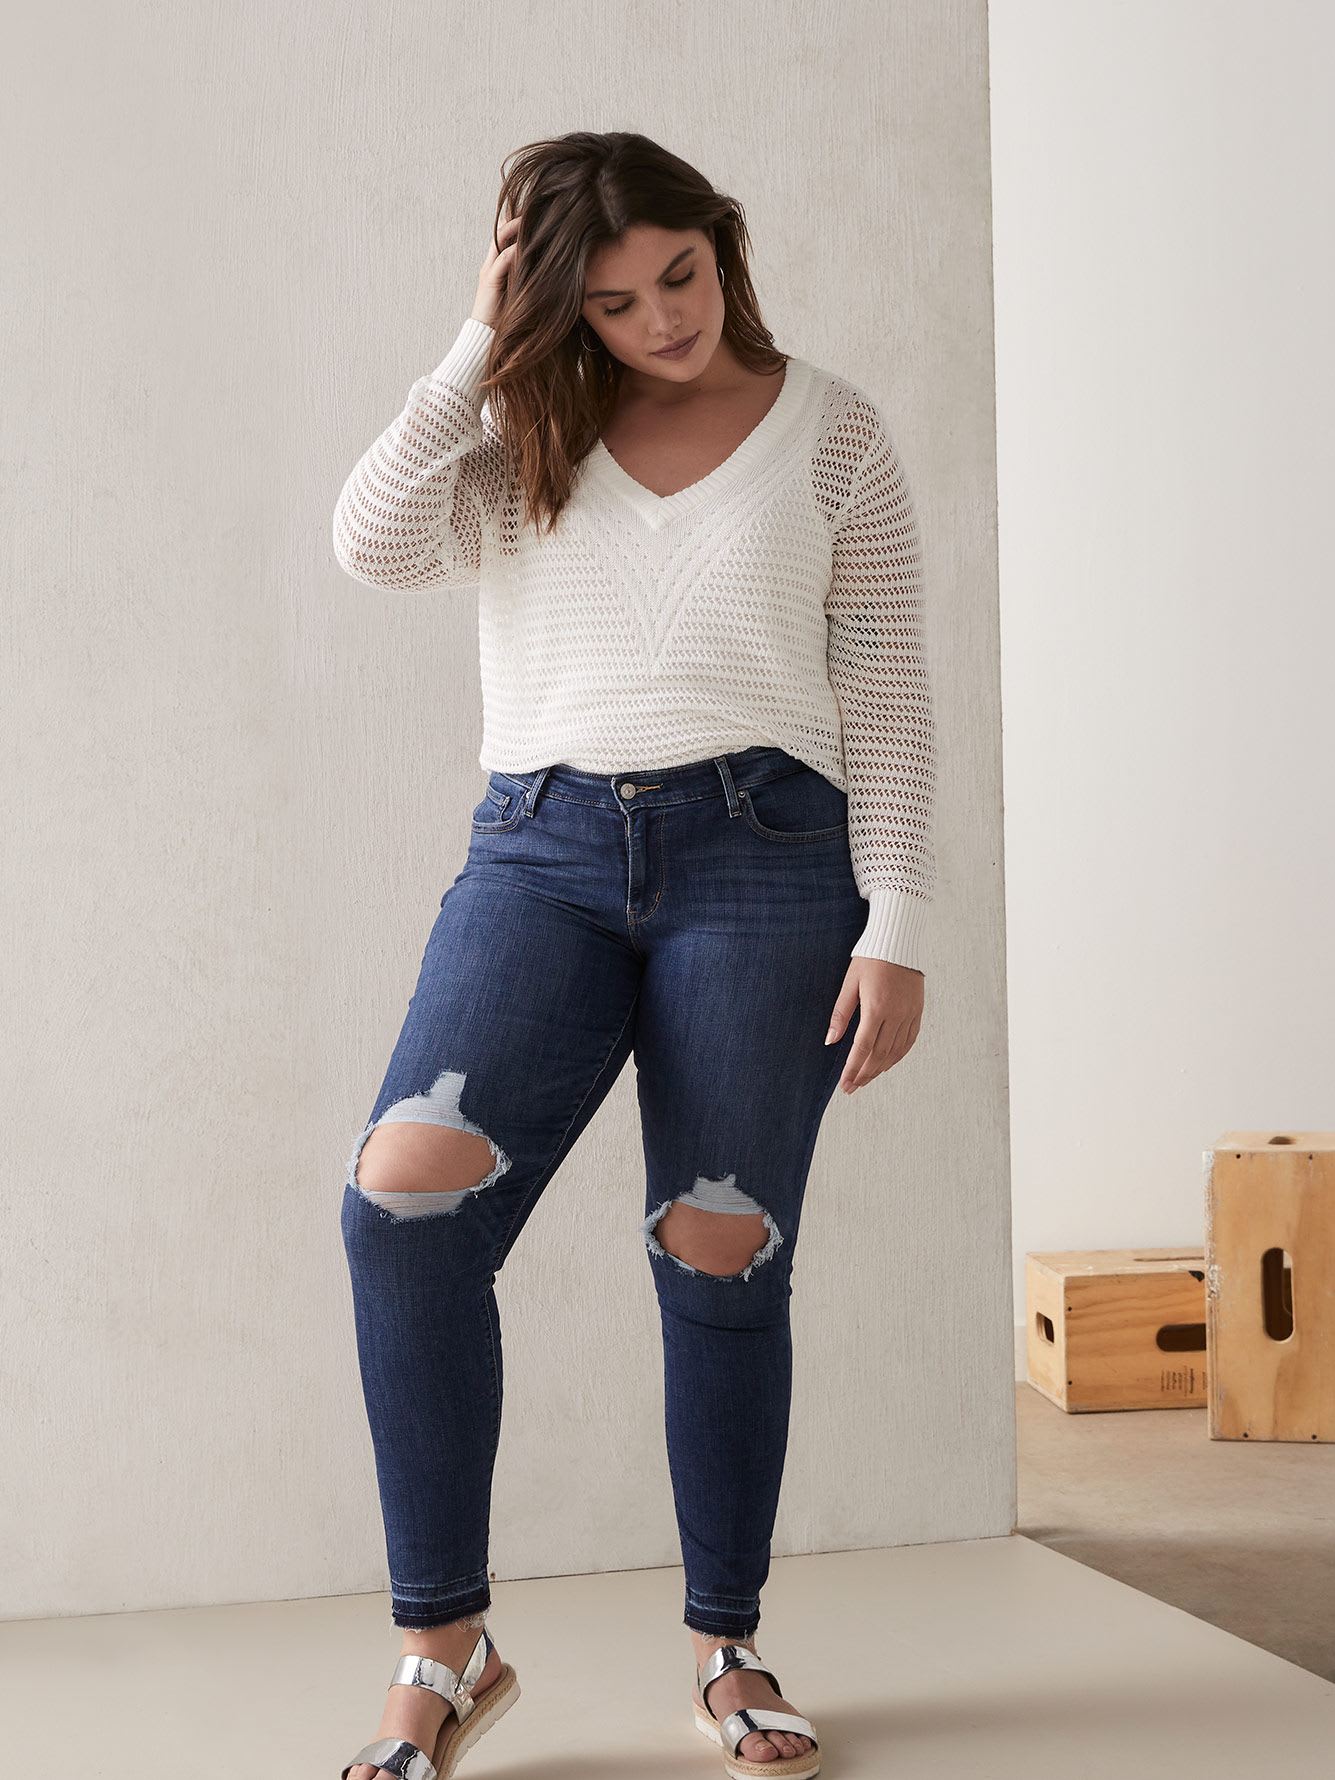 levi's 711 skinny jeans plus size